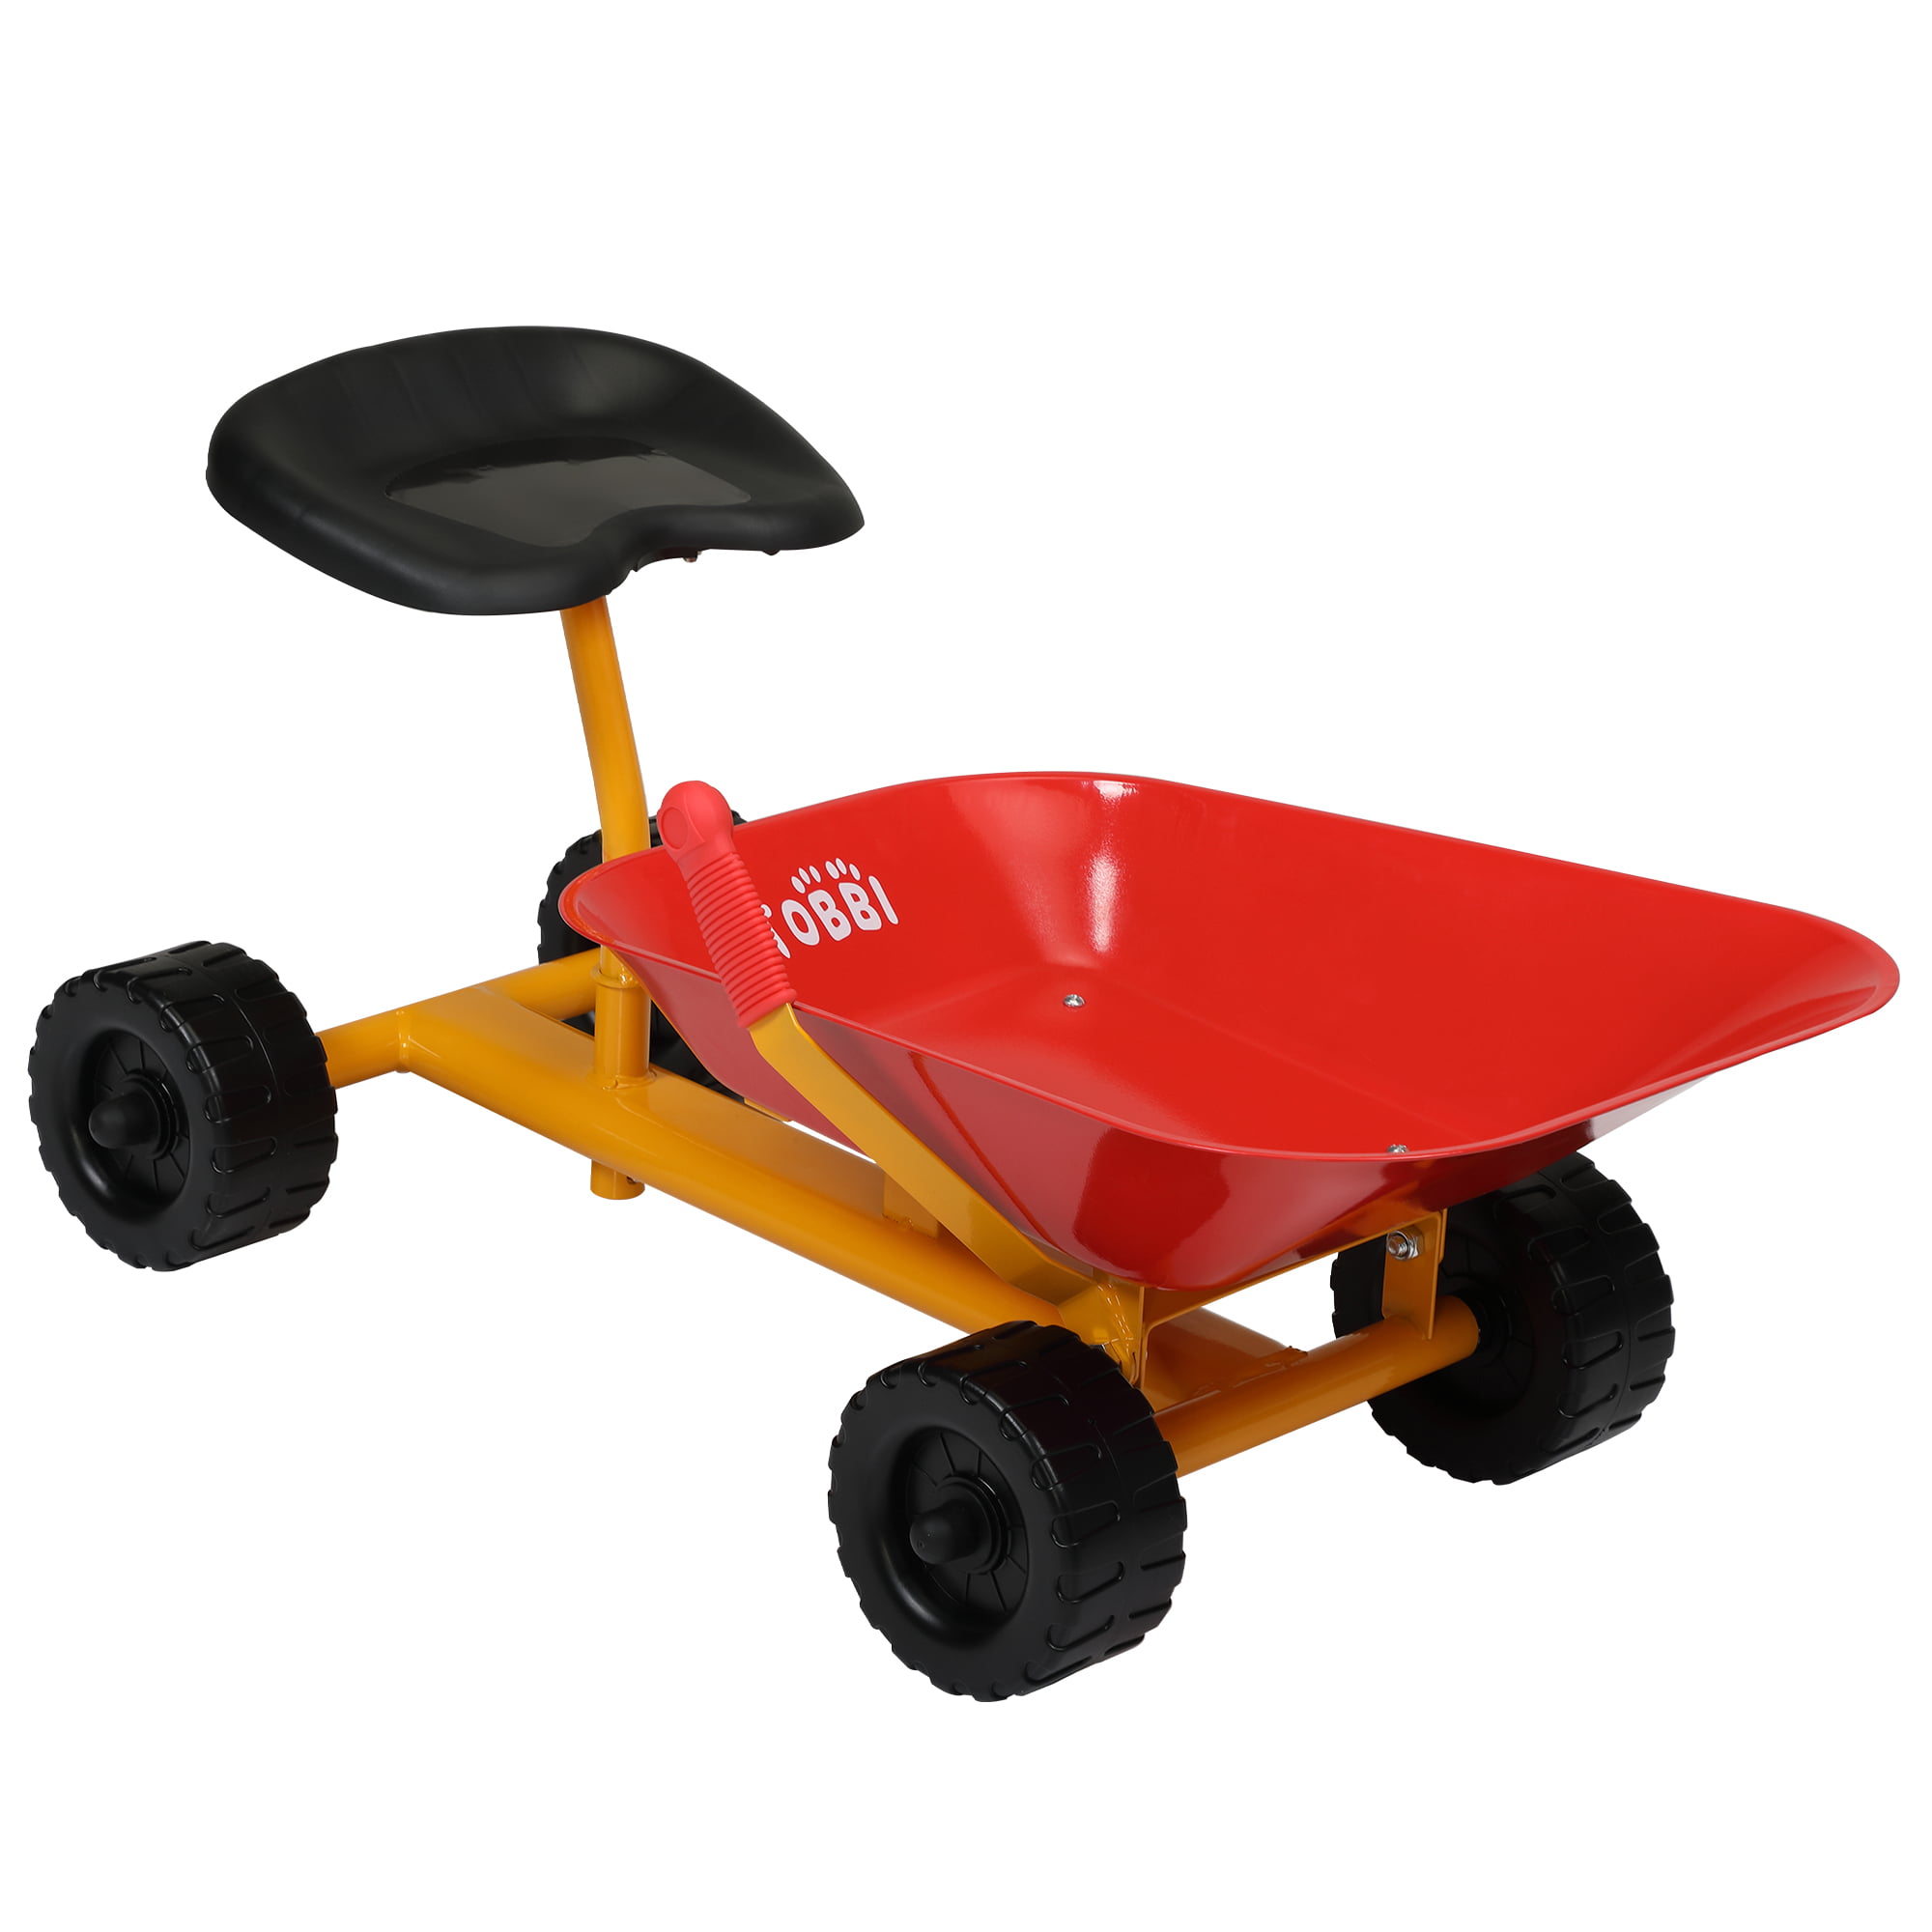 TOBBI Kids Ride on Sand Dumper Digging Scooper 4 Wheels Sand Toy Gift for Boys and Girls, Red